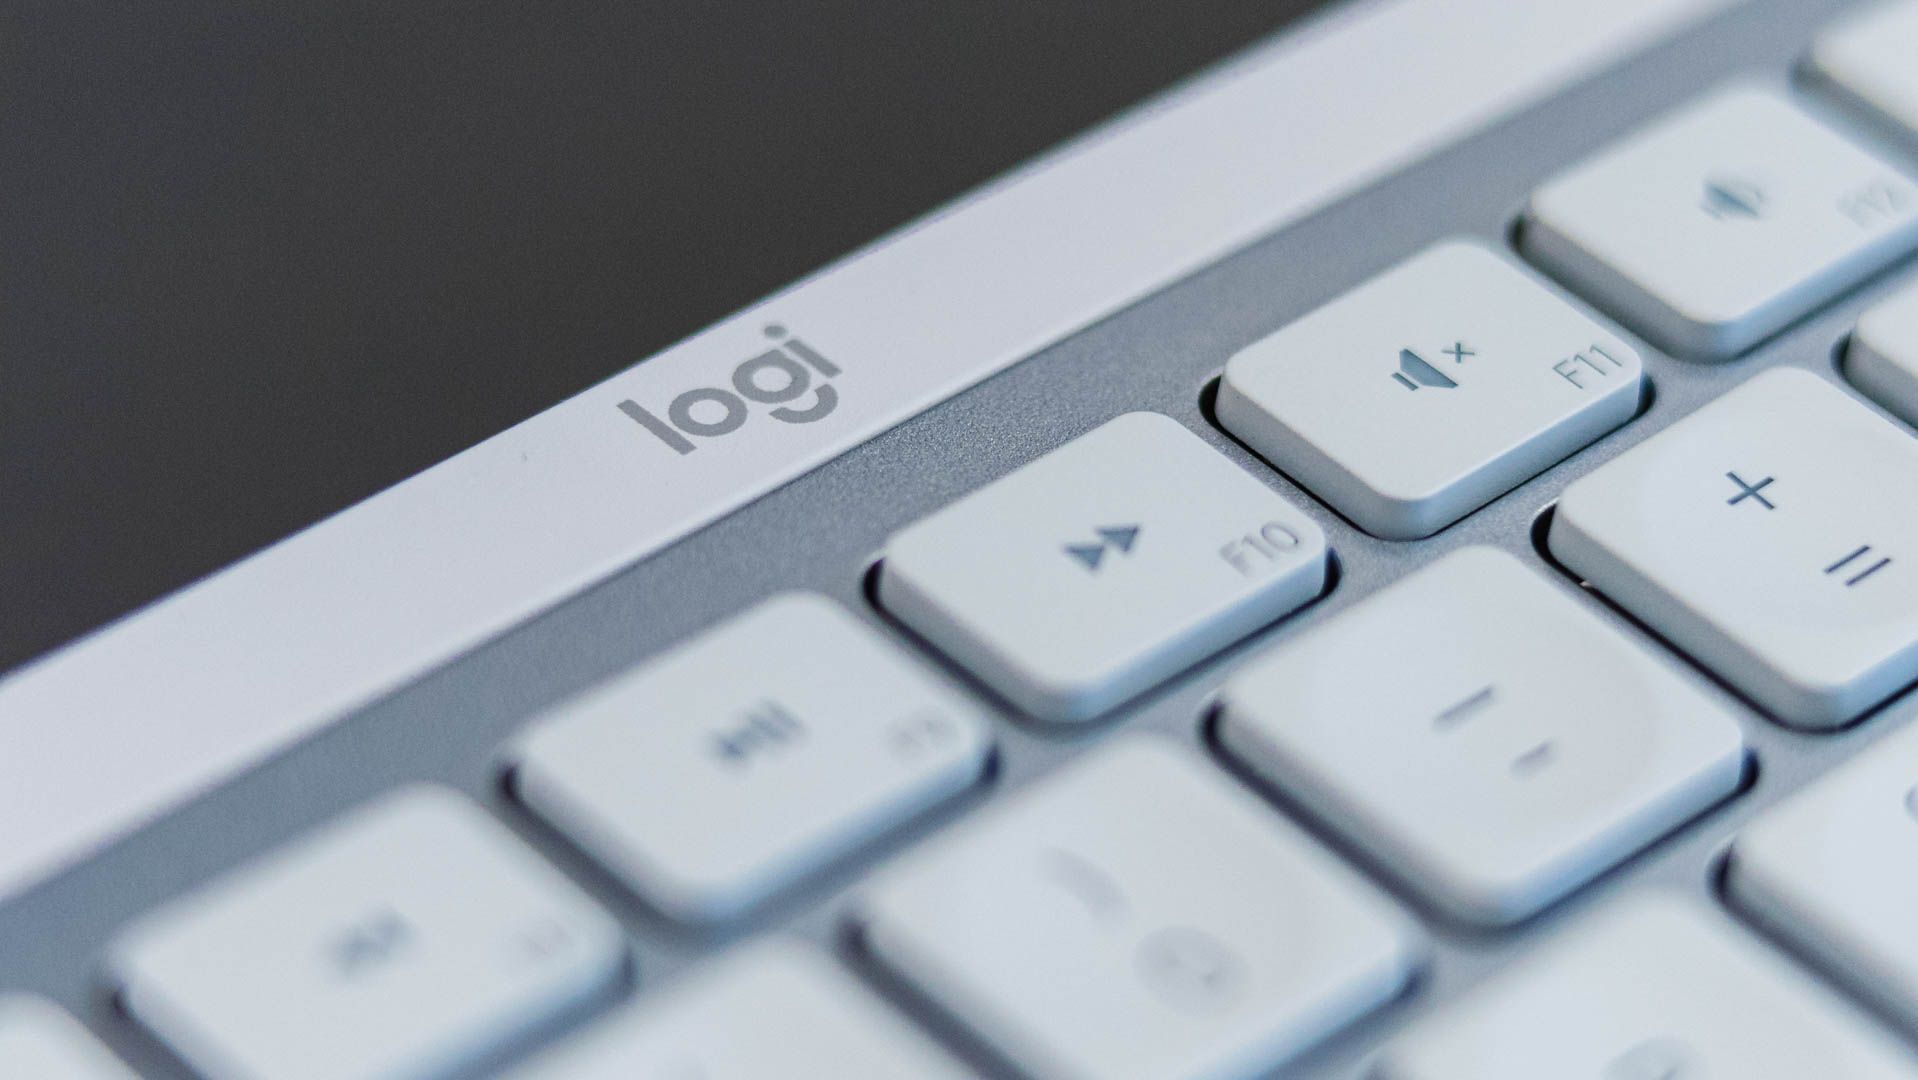 A close-up photo of the Logitech MX Keys keyboard.